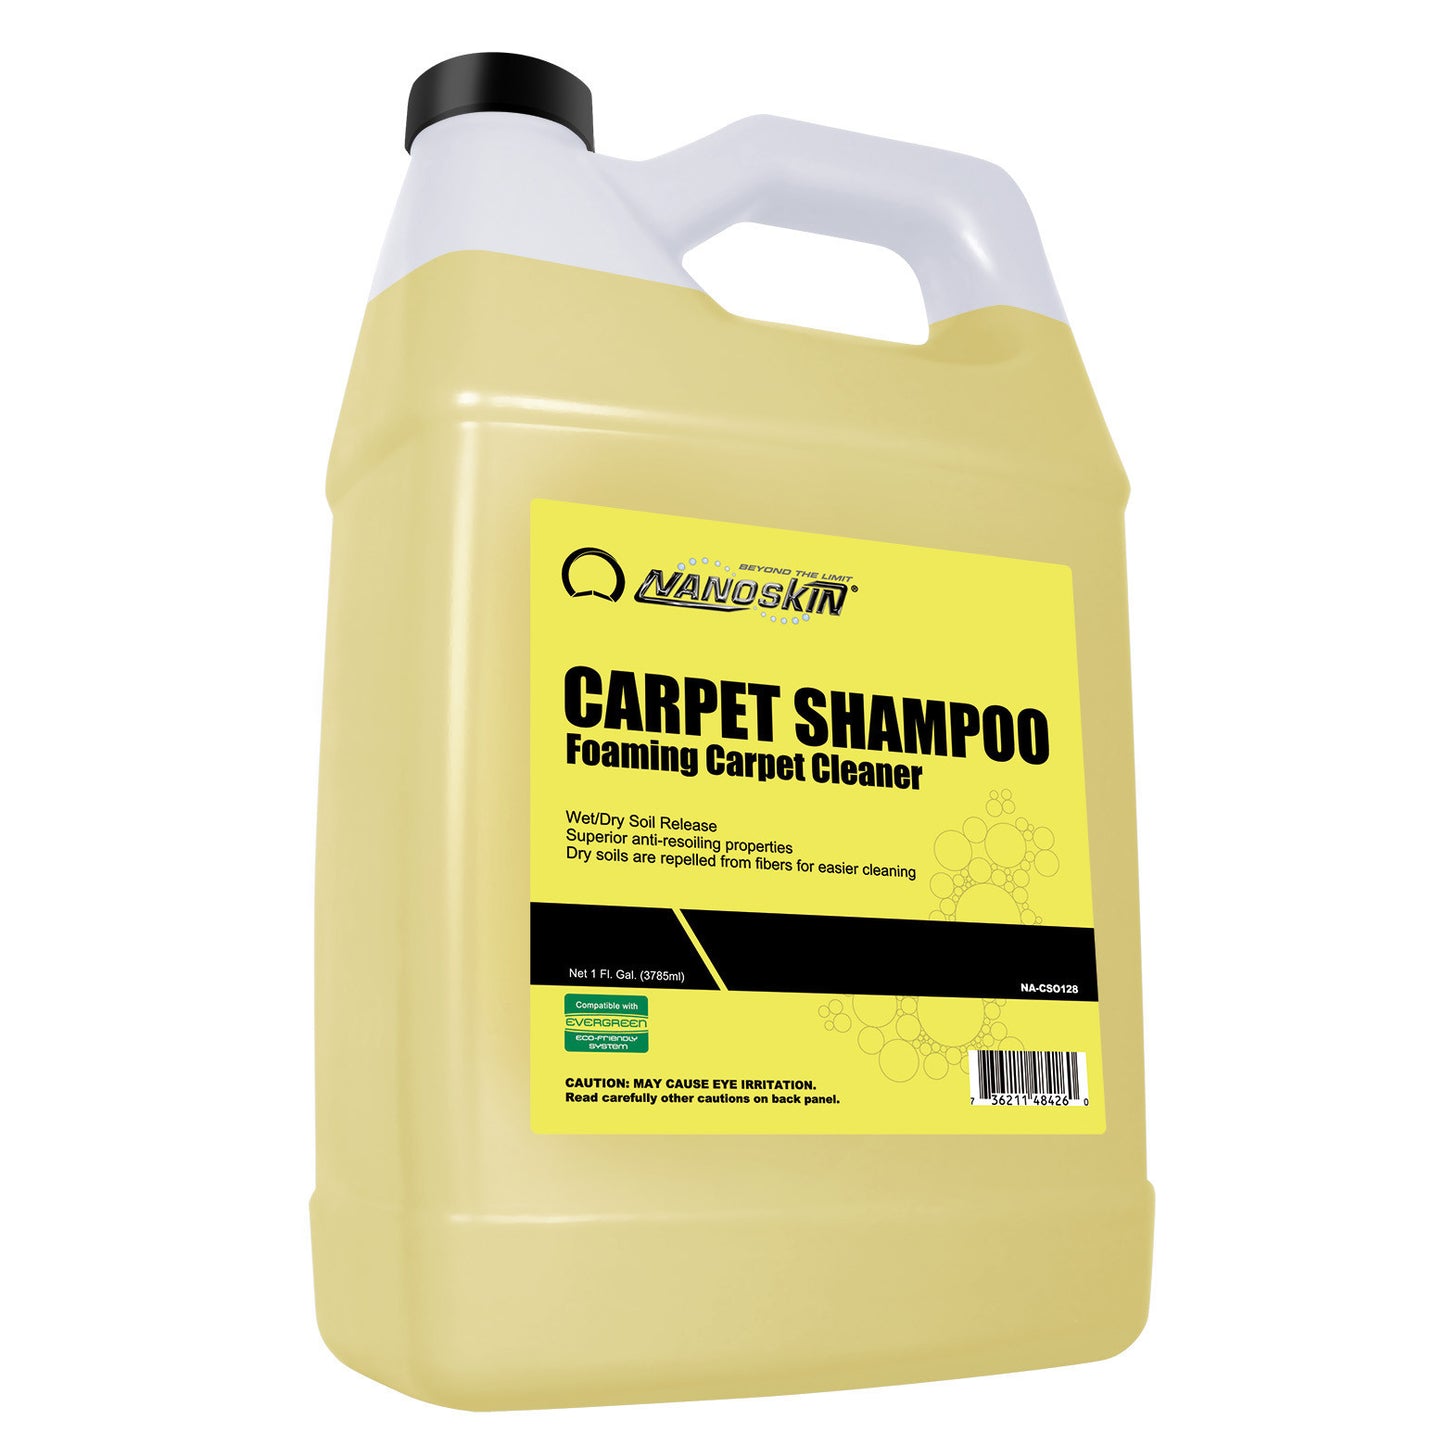 CARPET SHAMPOO Foaming Carpet Shampoo 19:1